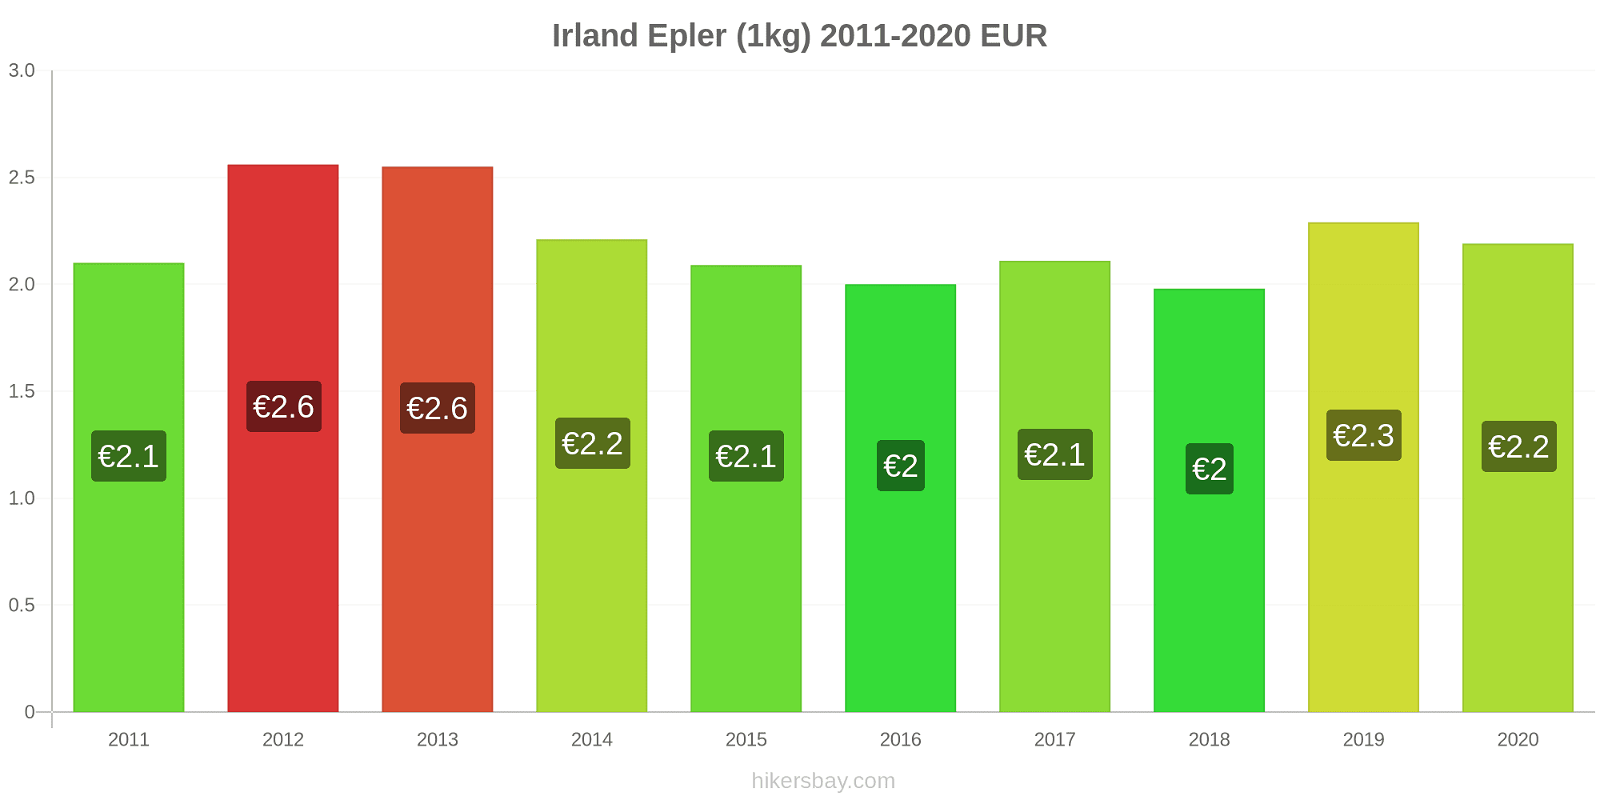 Irland prisendringer Epler (1kg) hikersbay.com